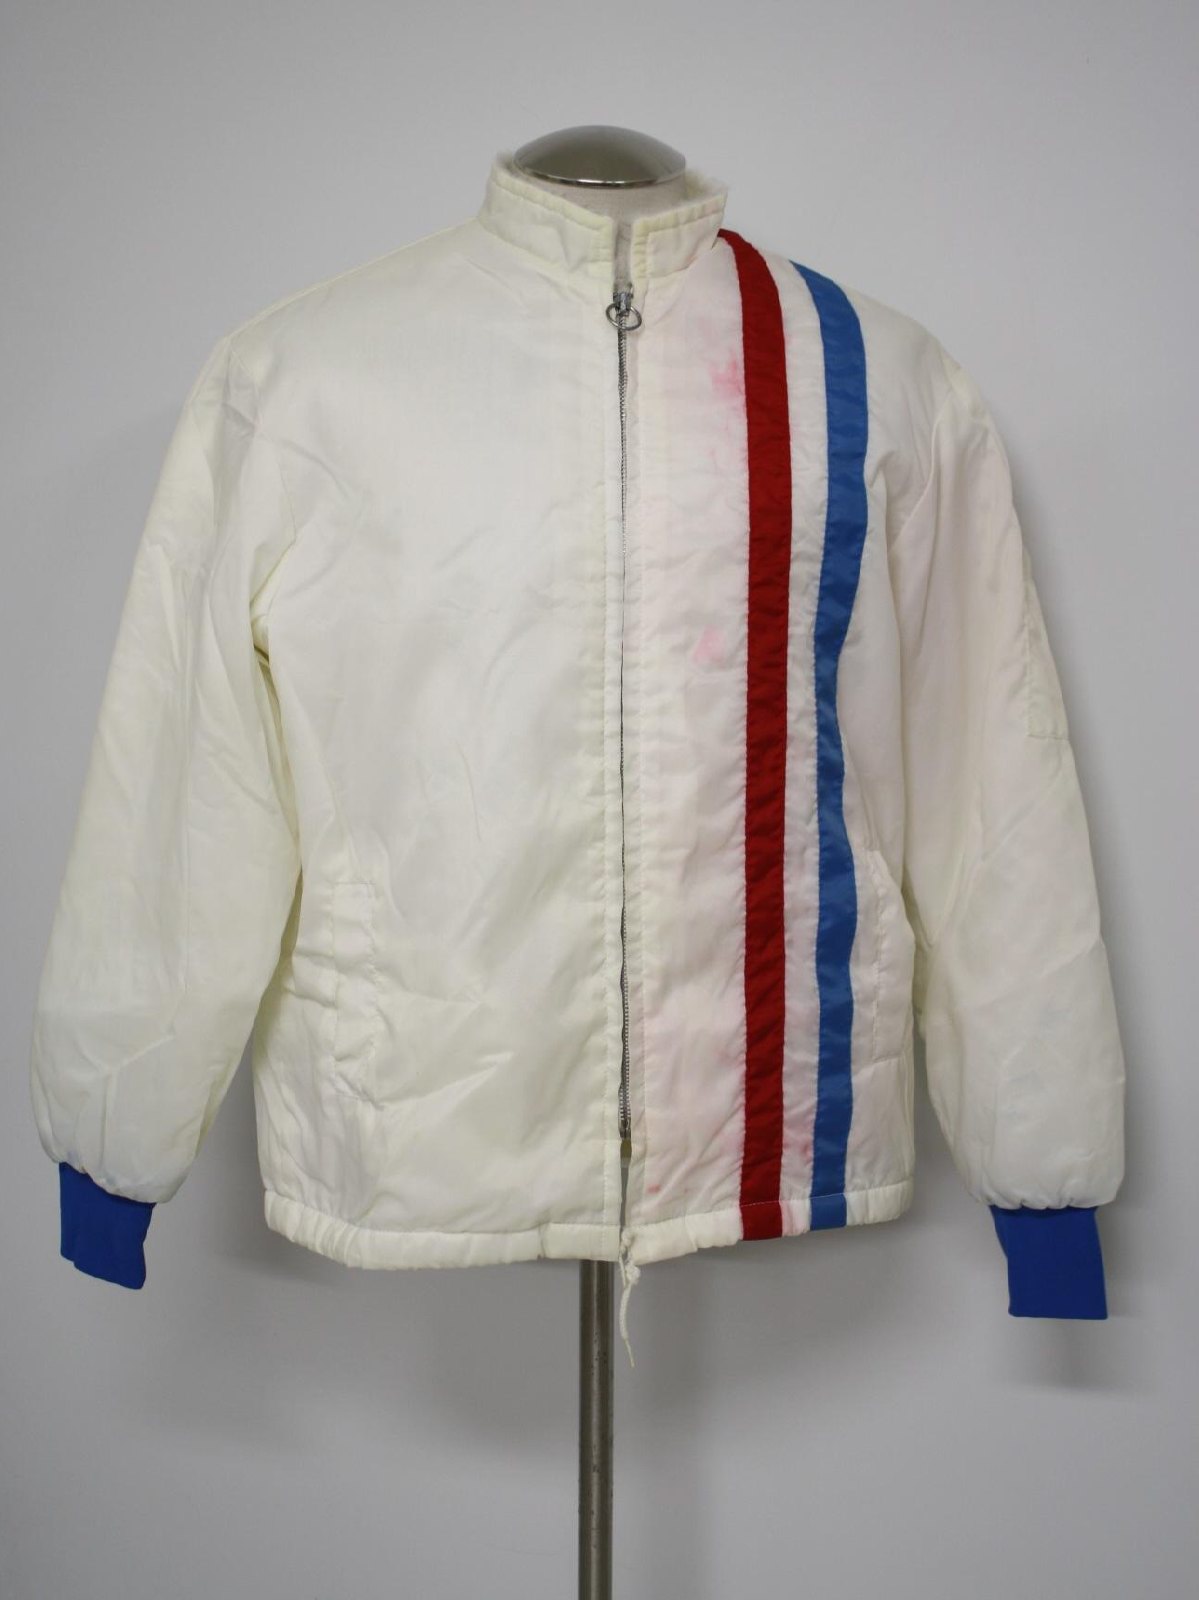 Retro 1960's Jacket (Great Lakes Jacket) : 60s -Great Lakes Jacket ...